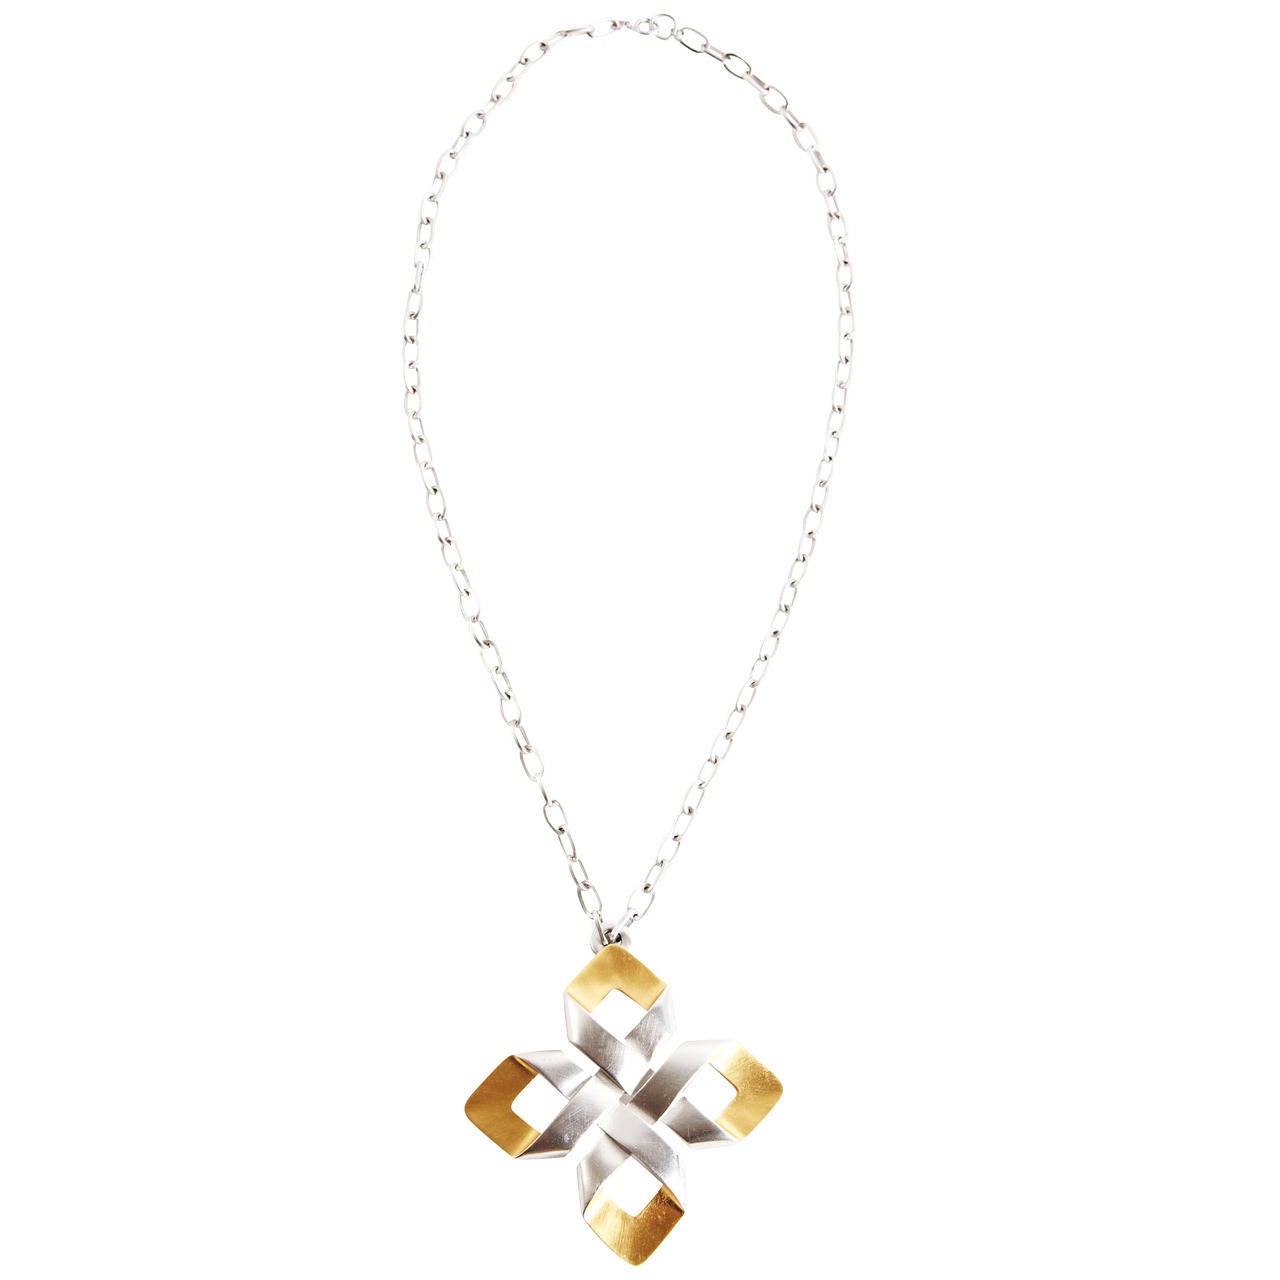 Trifari Modernist Pendant Necklace